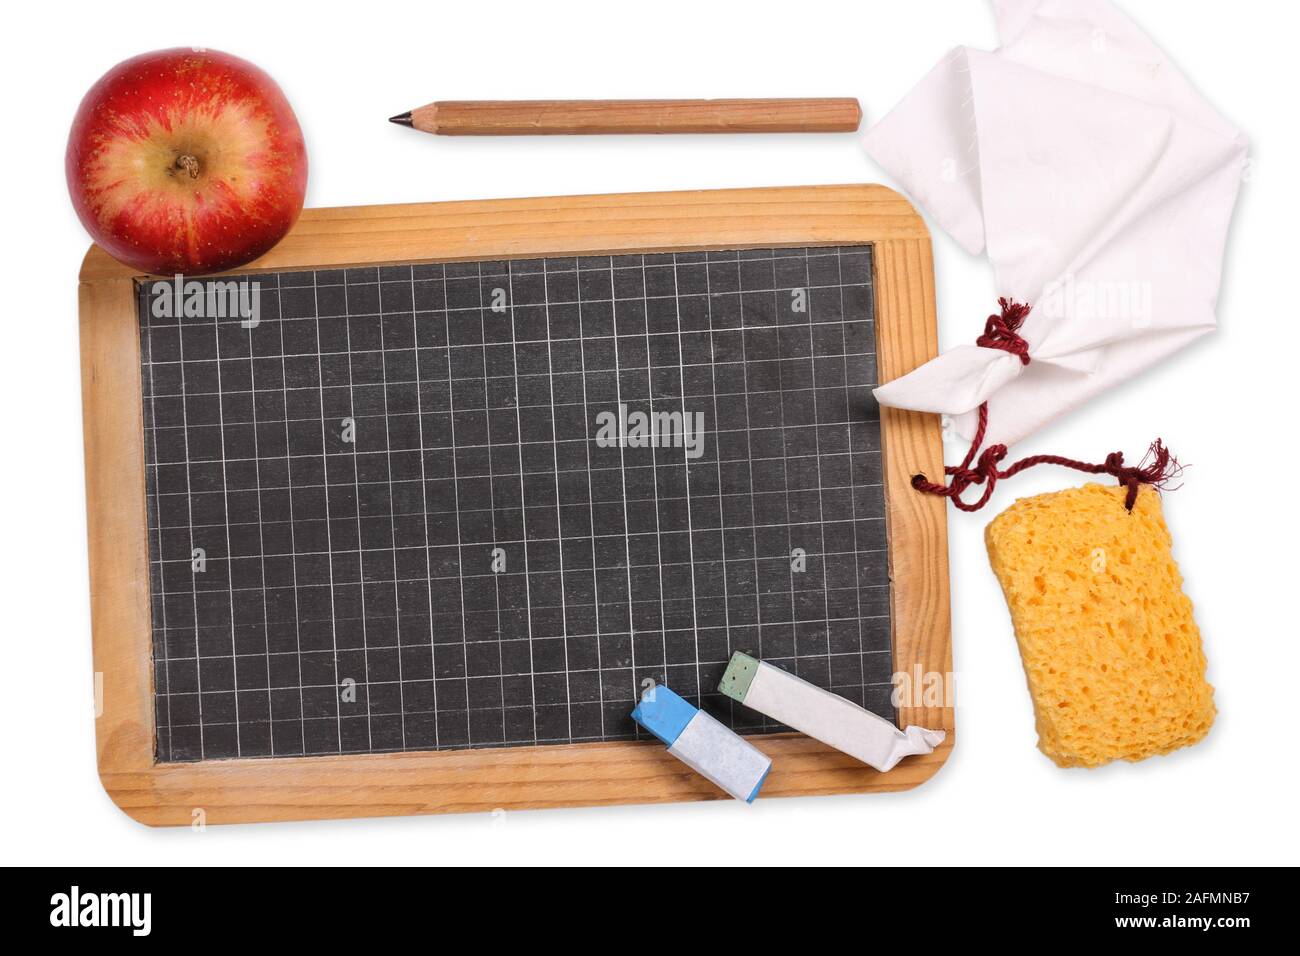 School board with apple and sponge Stock Photo